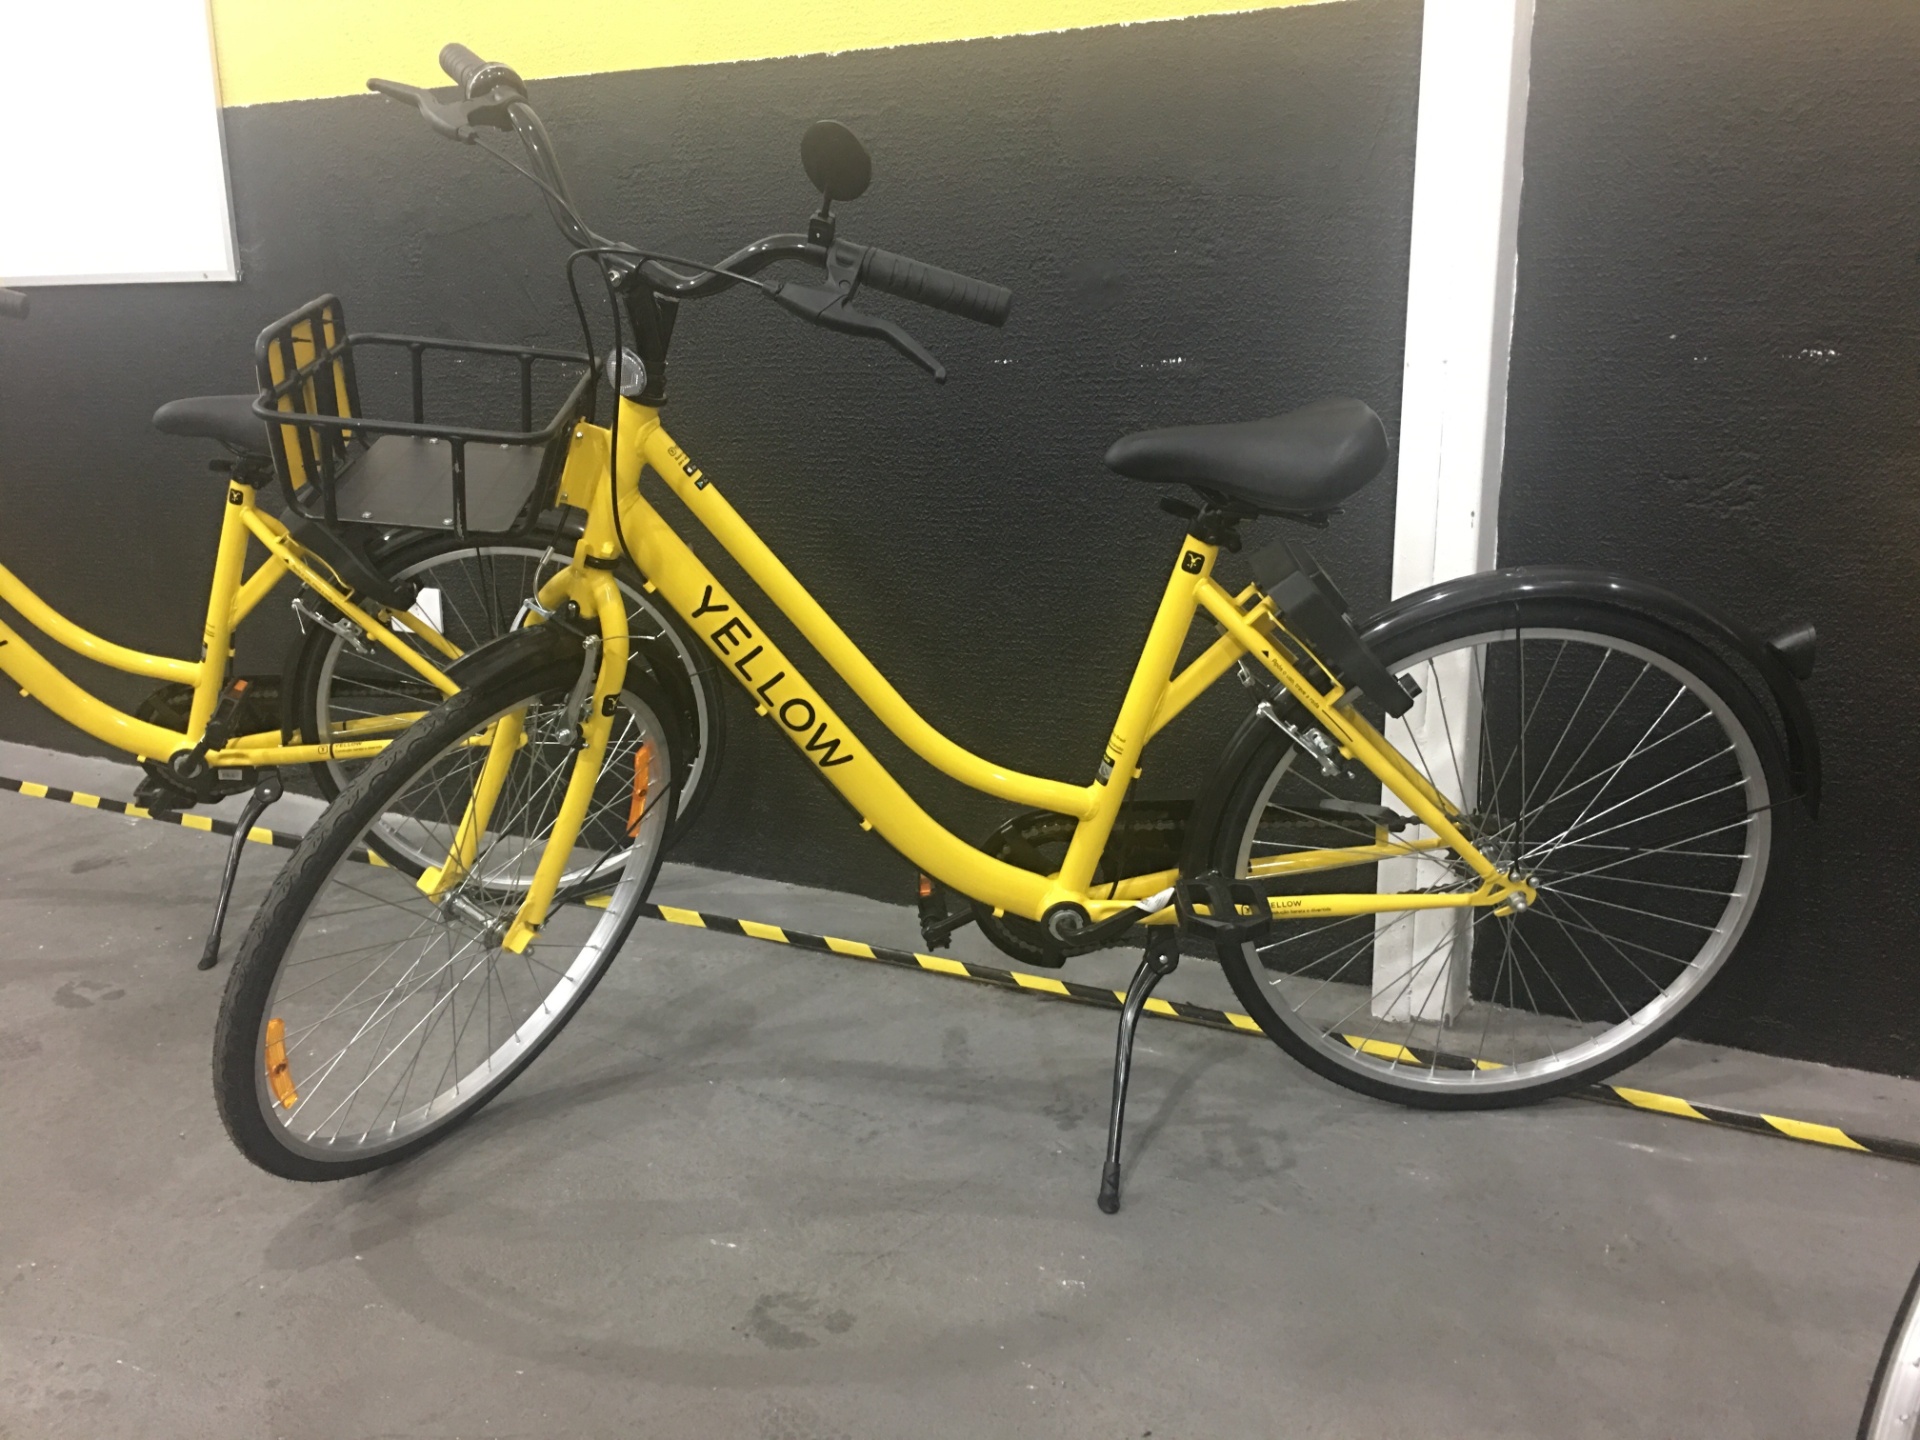 Yellow, empresa de compartilhamento de bicicletas, recebe investimento de USmi